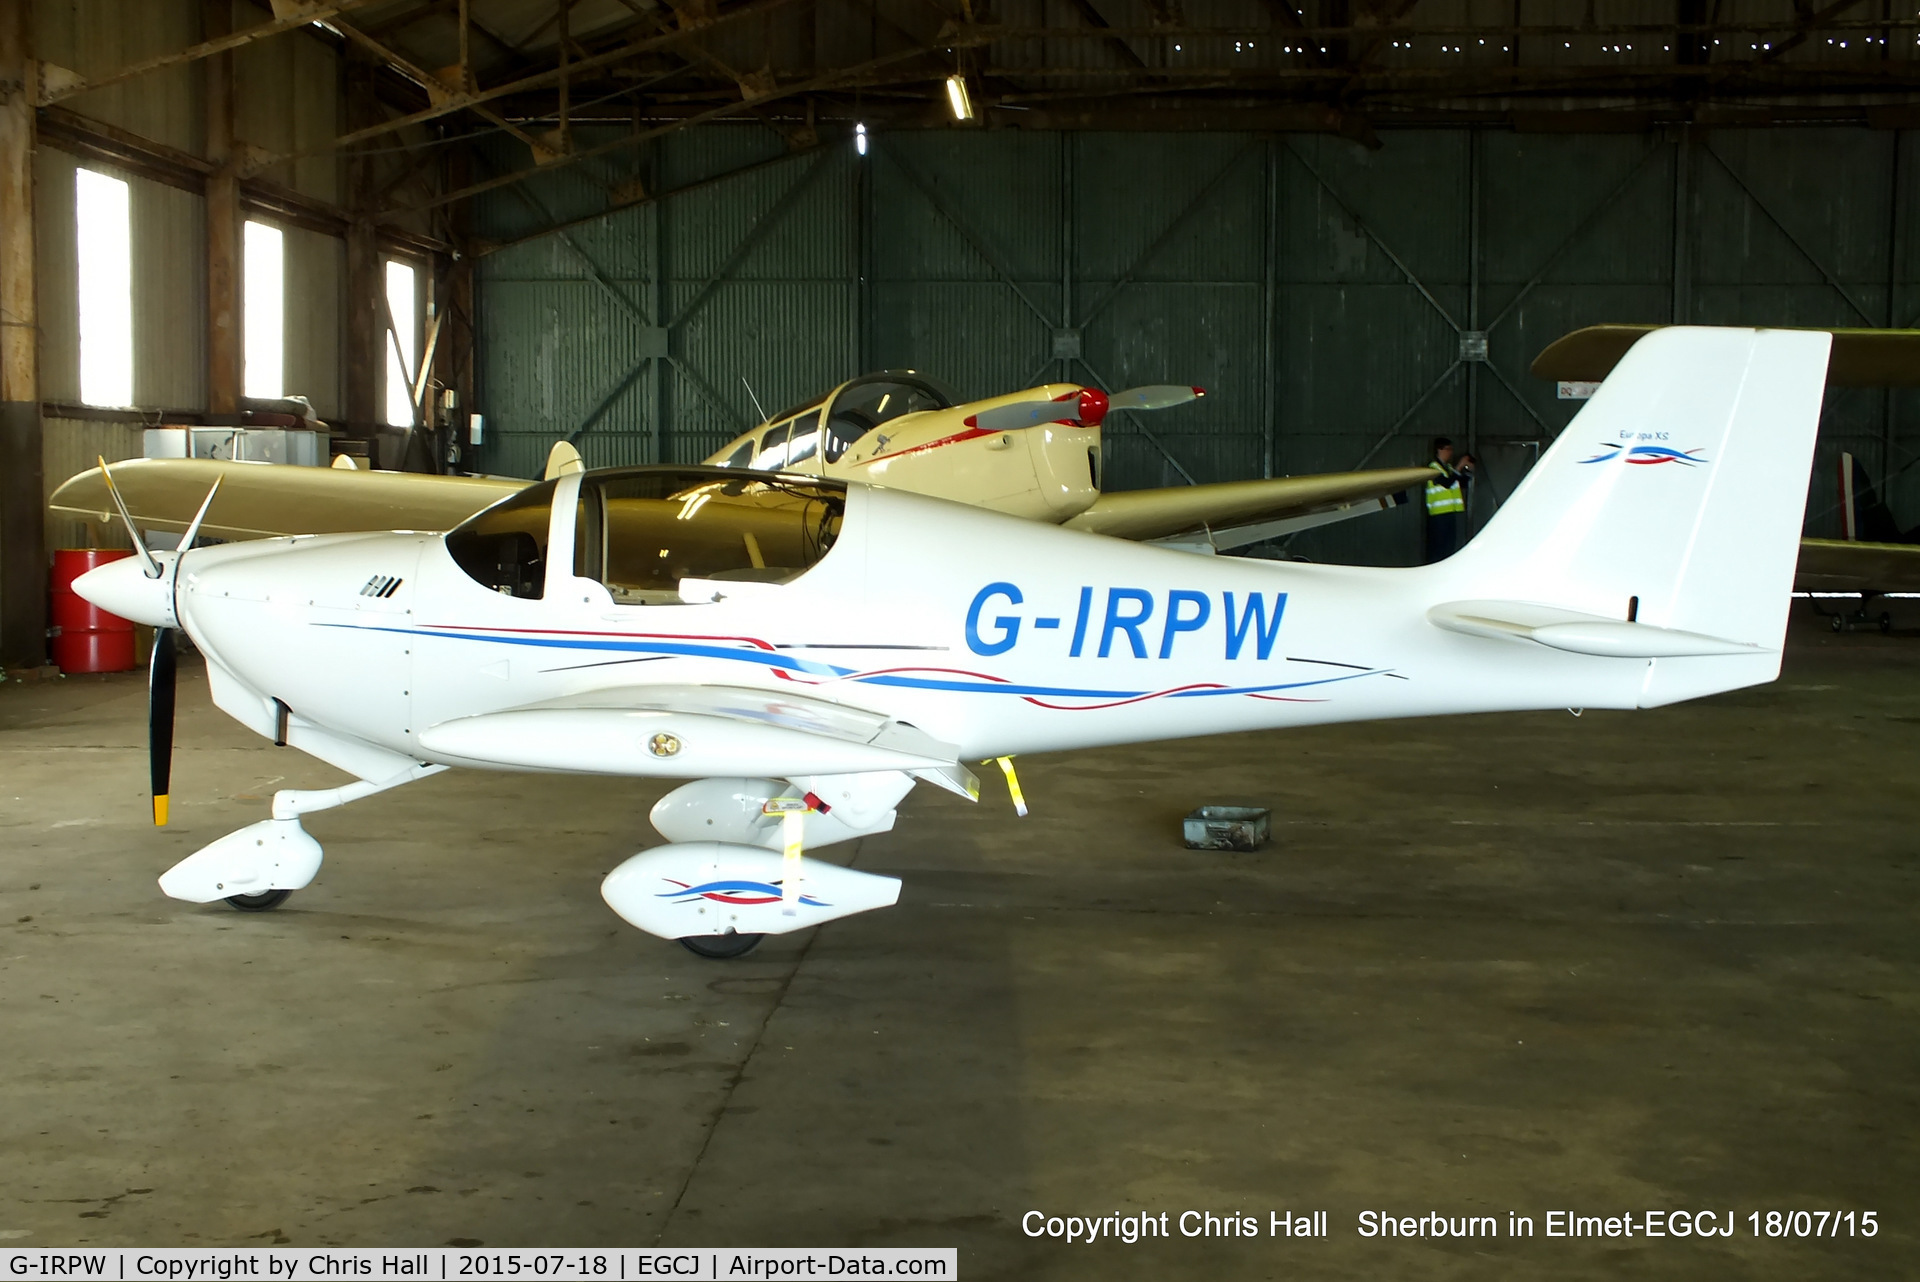 G-IRPW, 2013 Europa XS Tri-Gear C/N PFA 247-14495, at Sherburn in Elmet